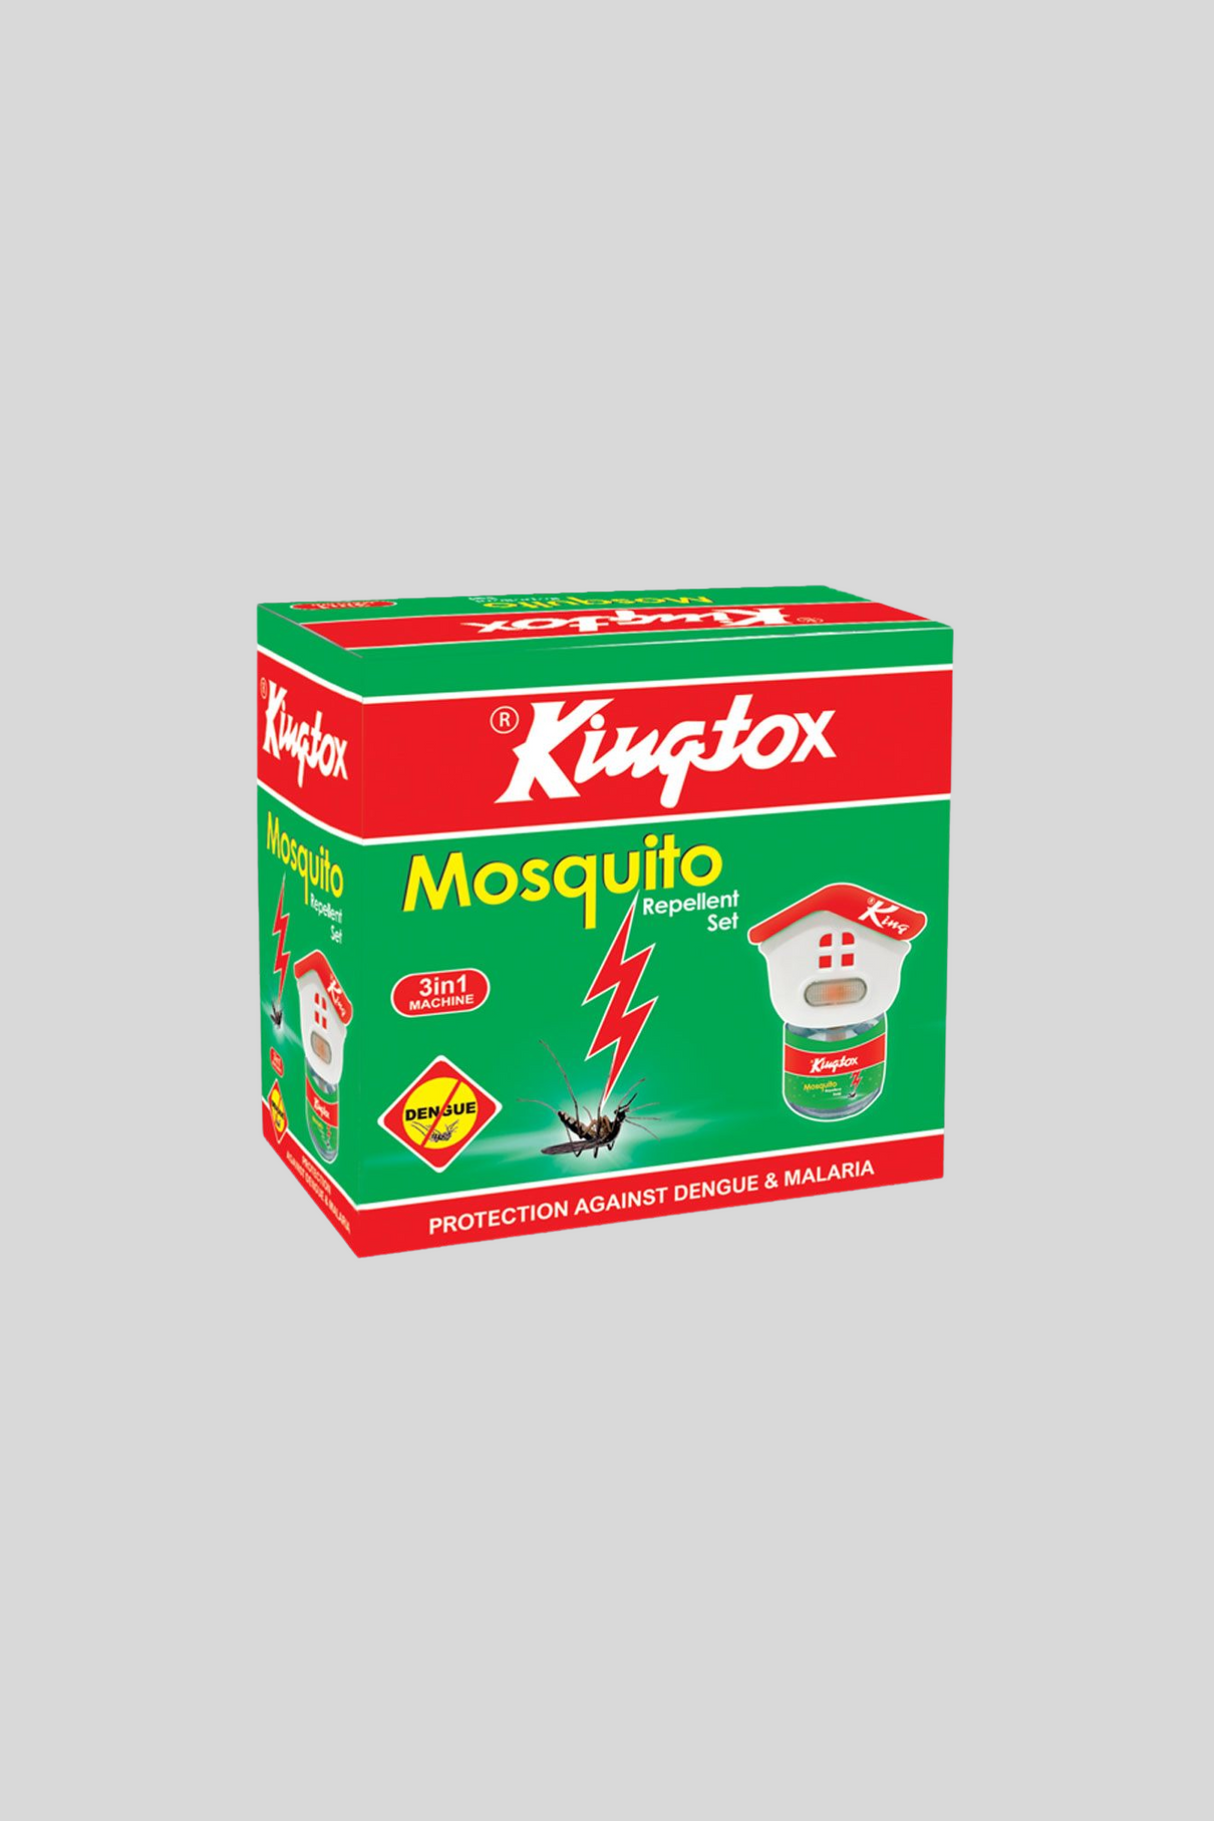 kingtox mosquito set 2in1